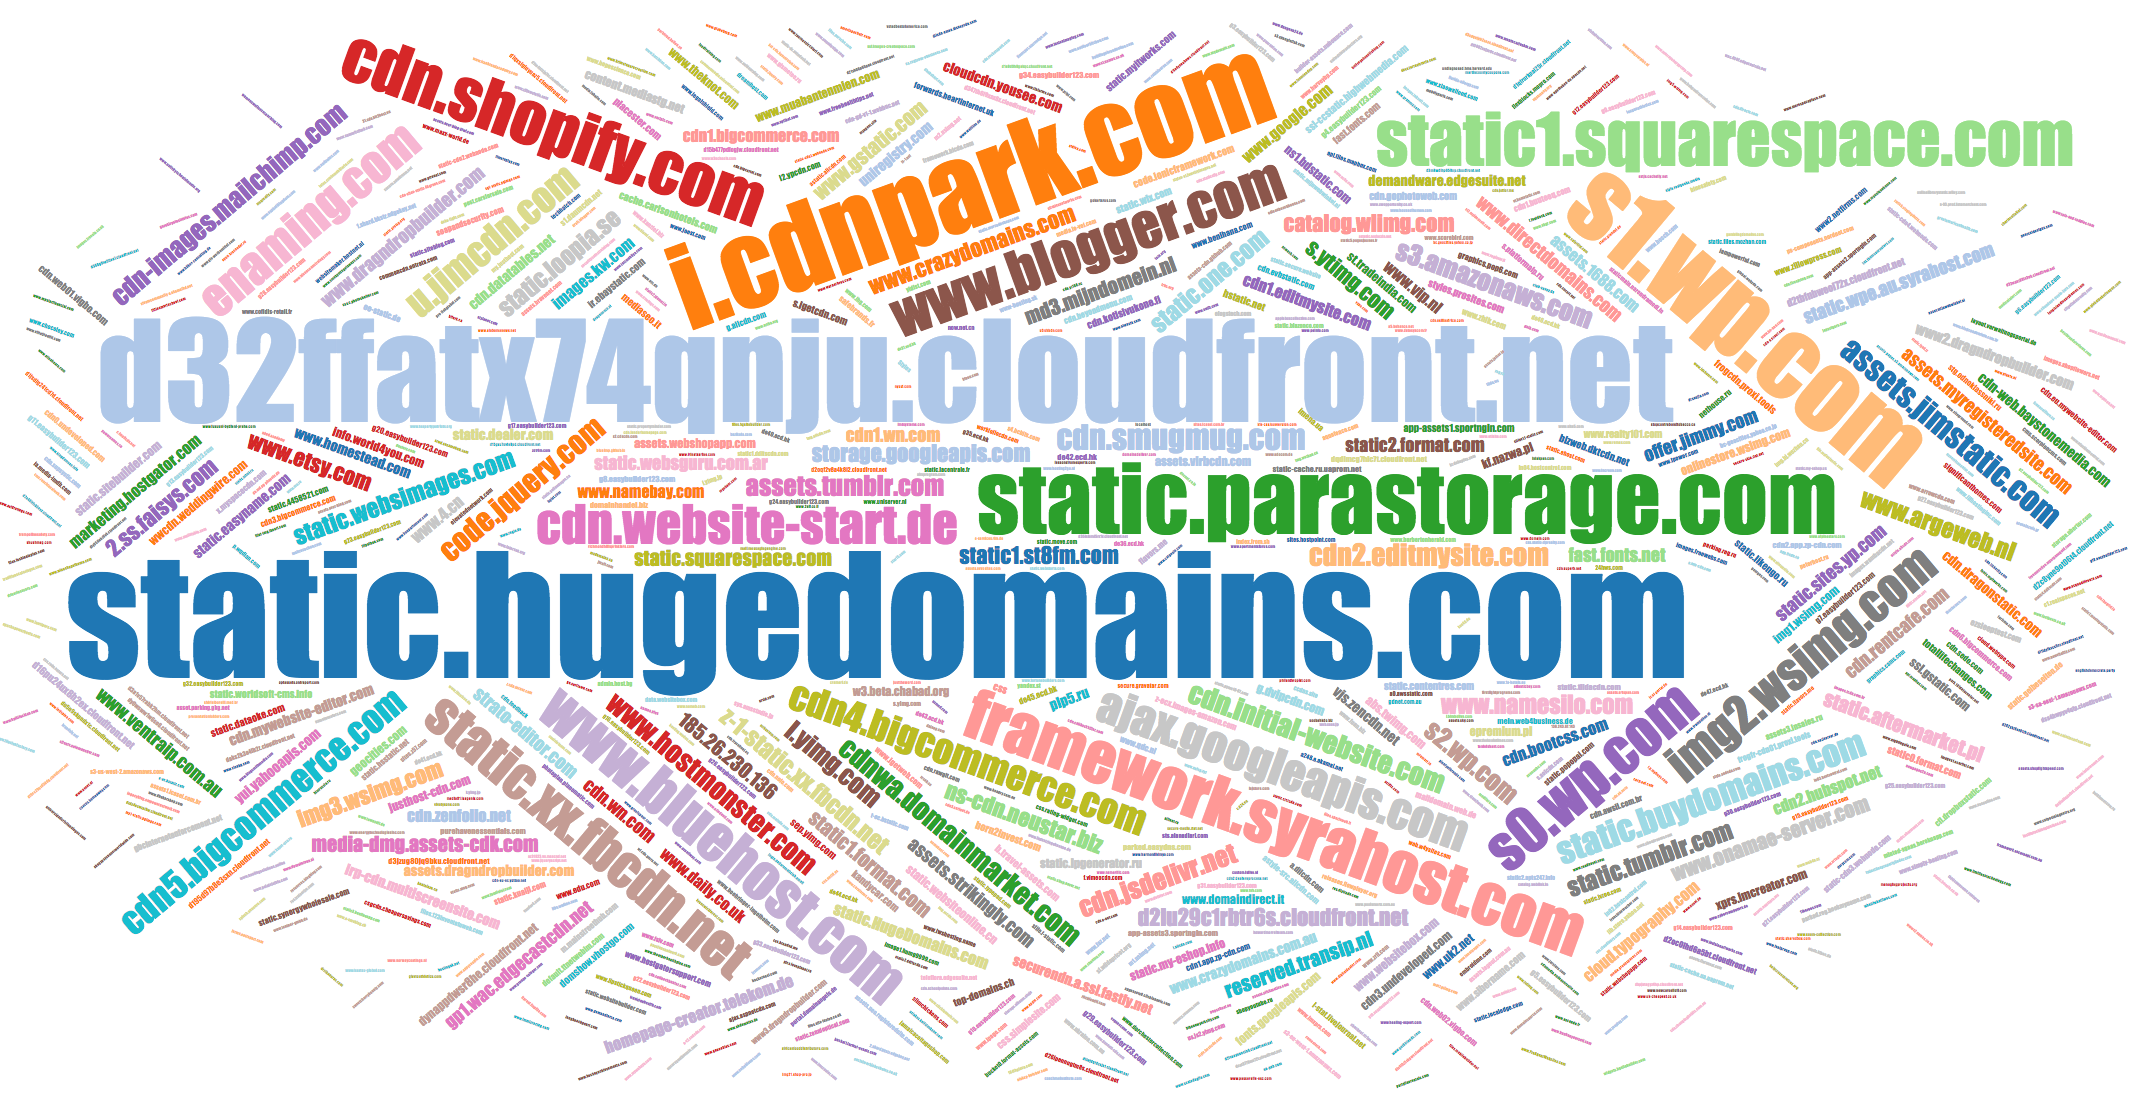 Popular names of CSS domains x.myspacecdn.com, xprs.imcreator.com, etc.